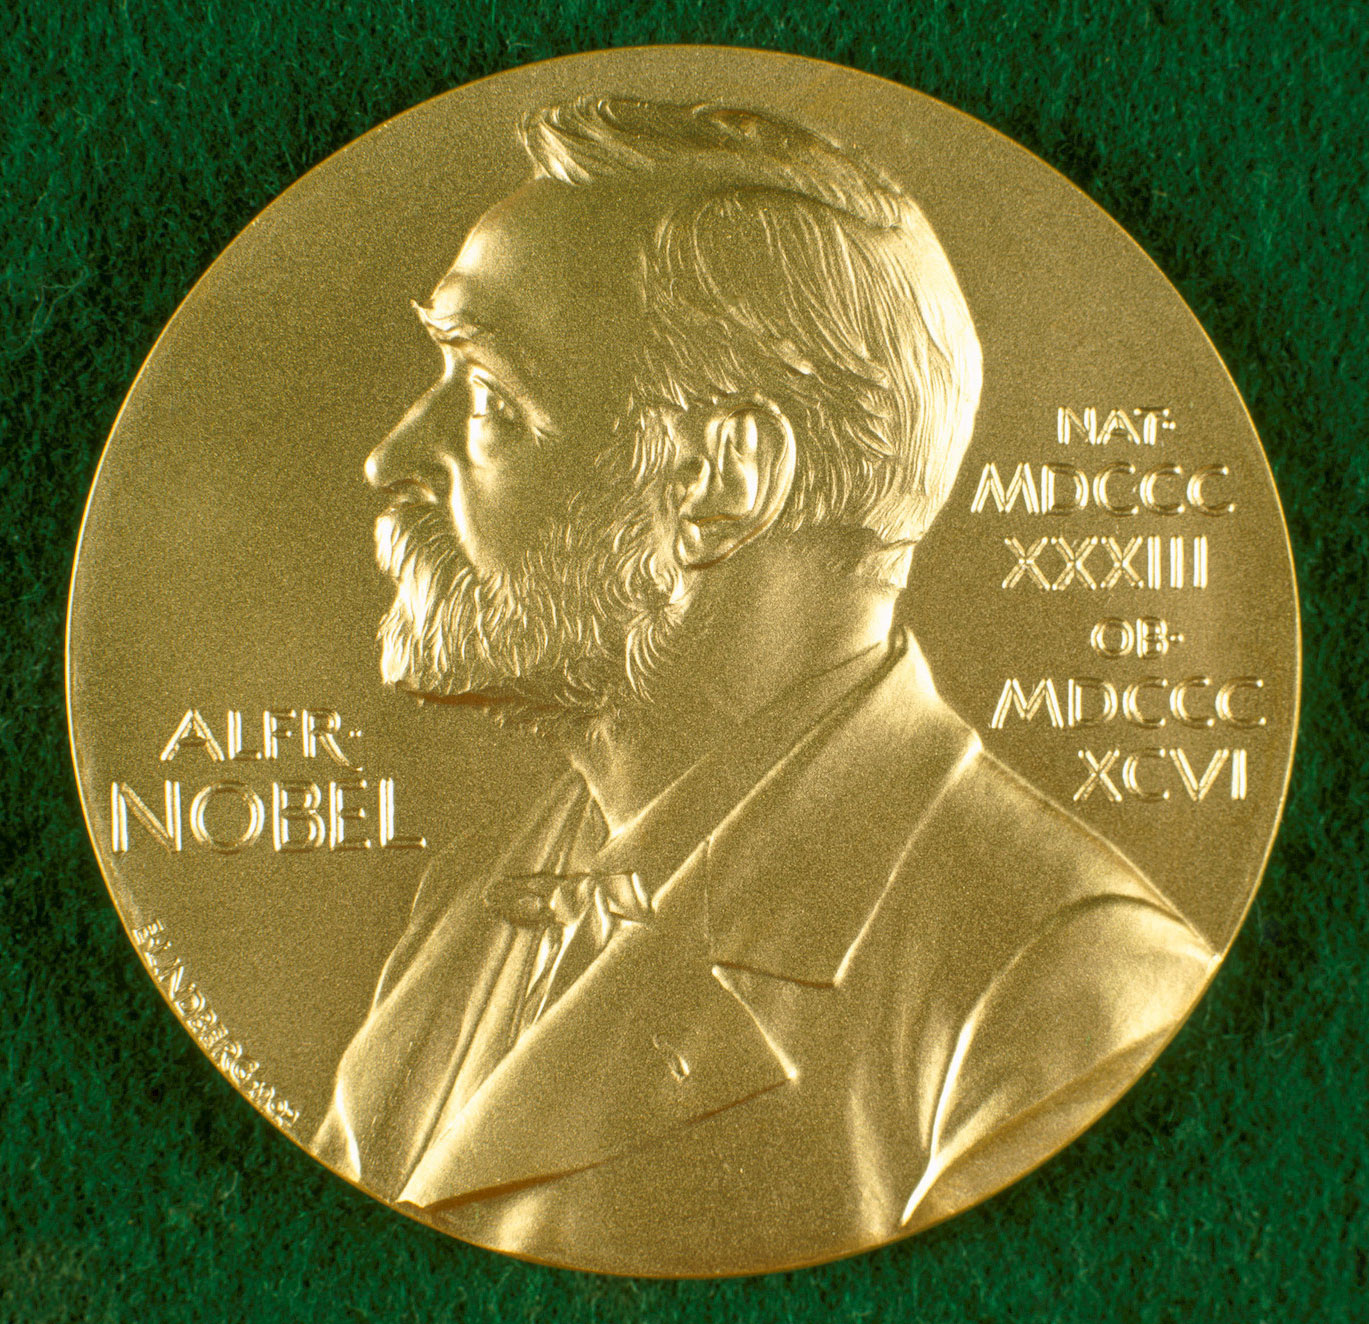 Nobel Prize for chemistry awarded to Carolyn Bertozzi, Morten Meldal, Barry Sharpless